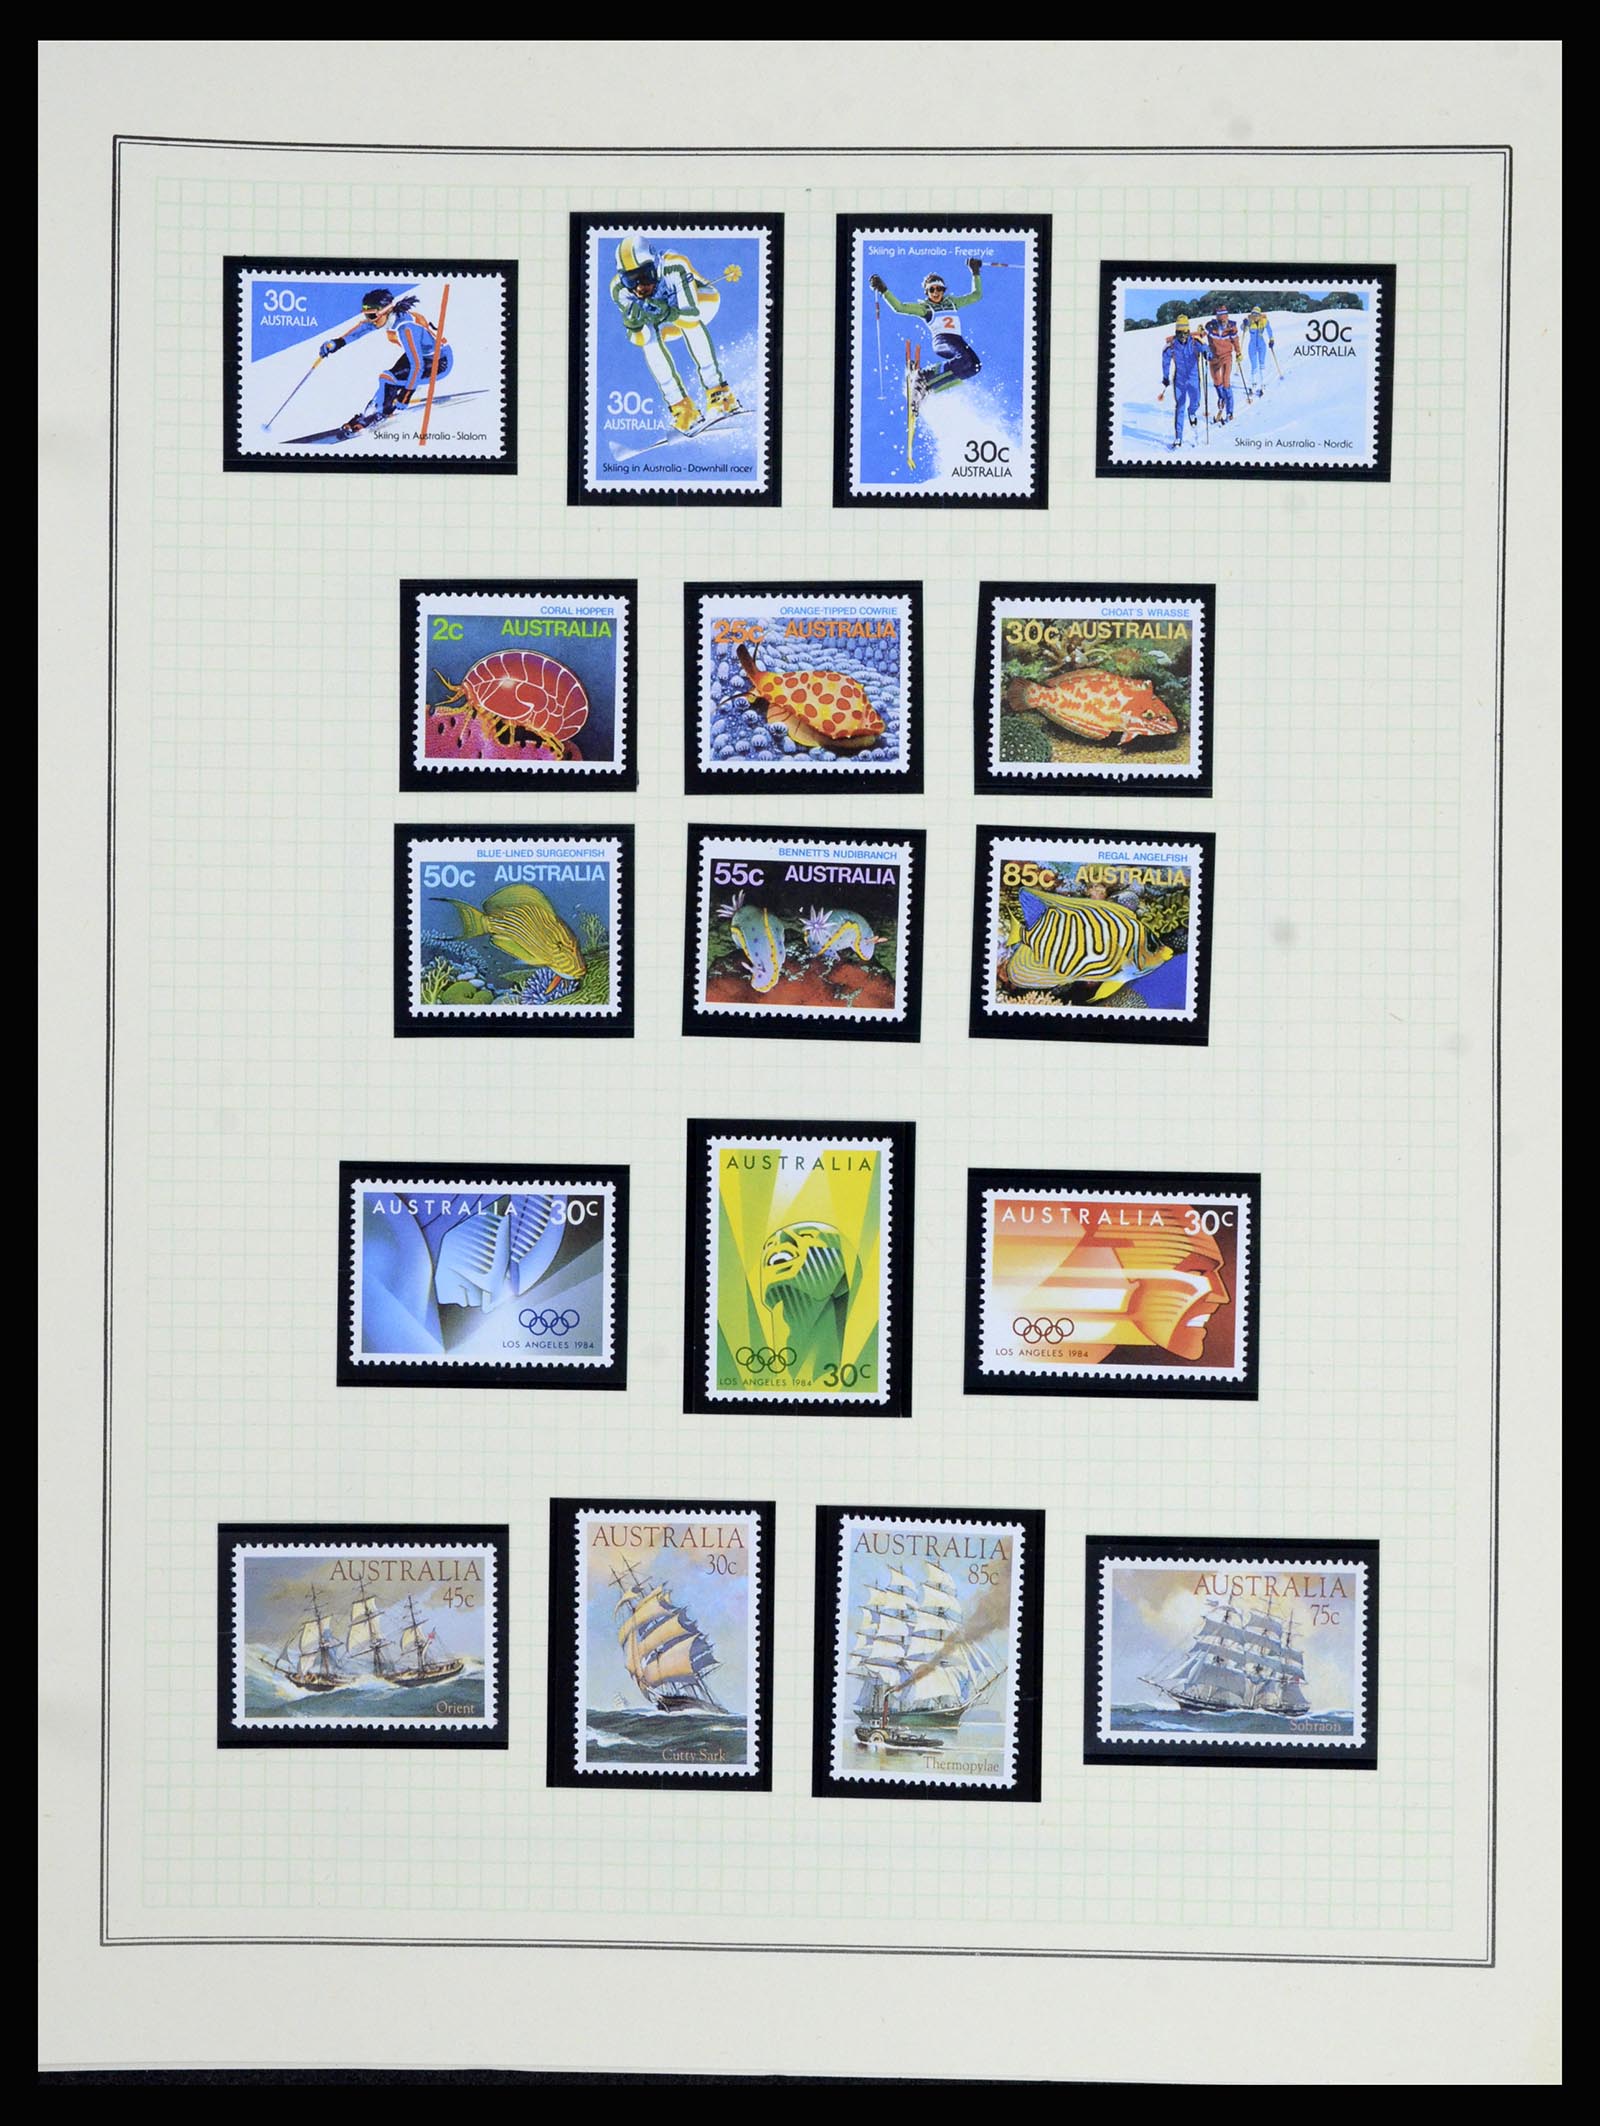 37049 088 - Stamp collection 37049 Australia 1913-1990.